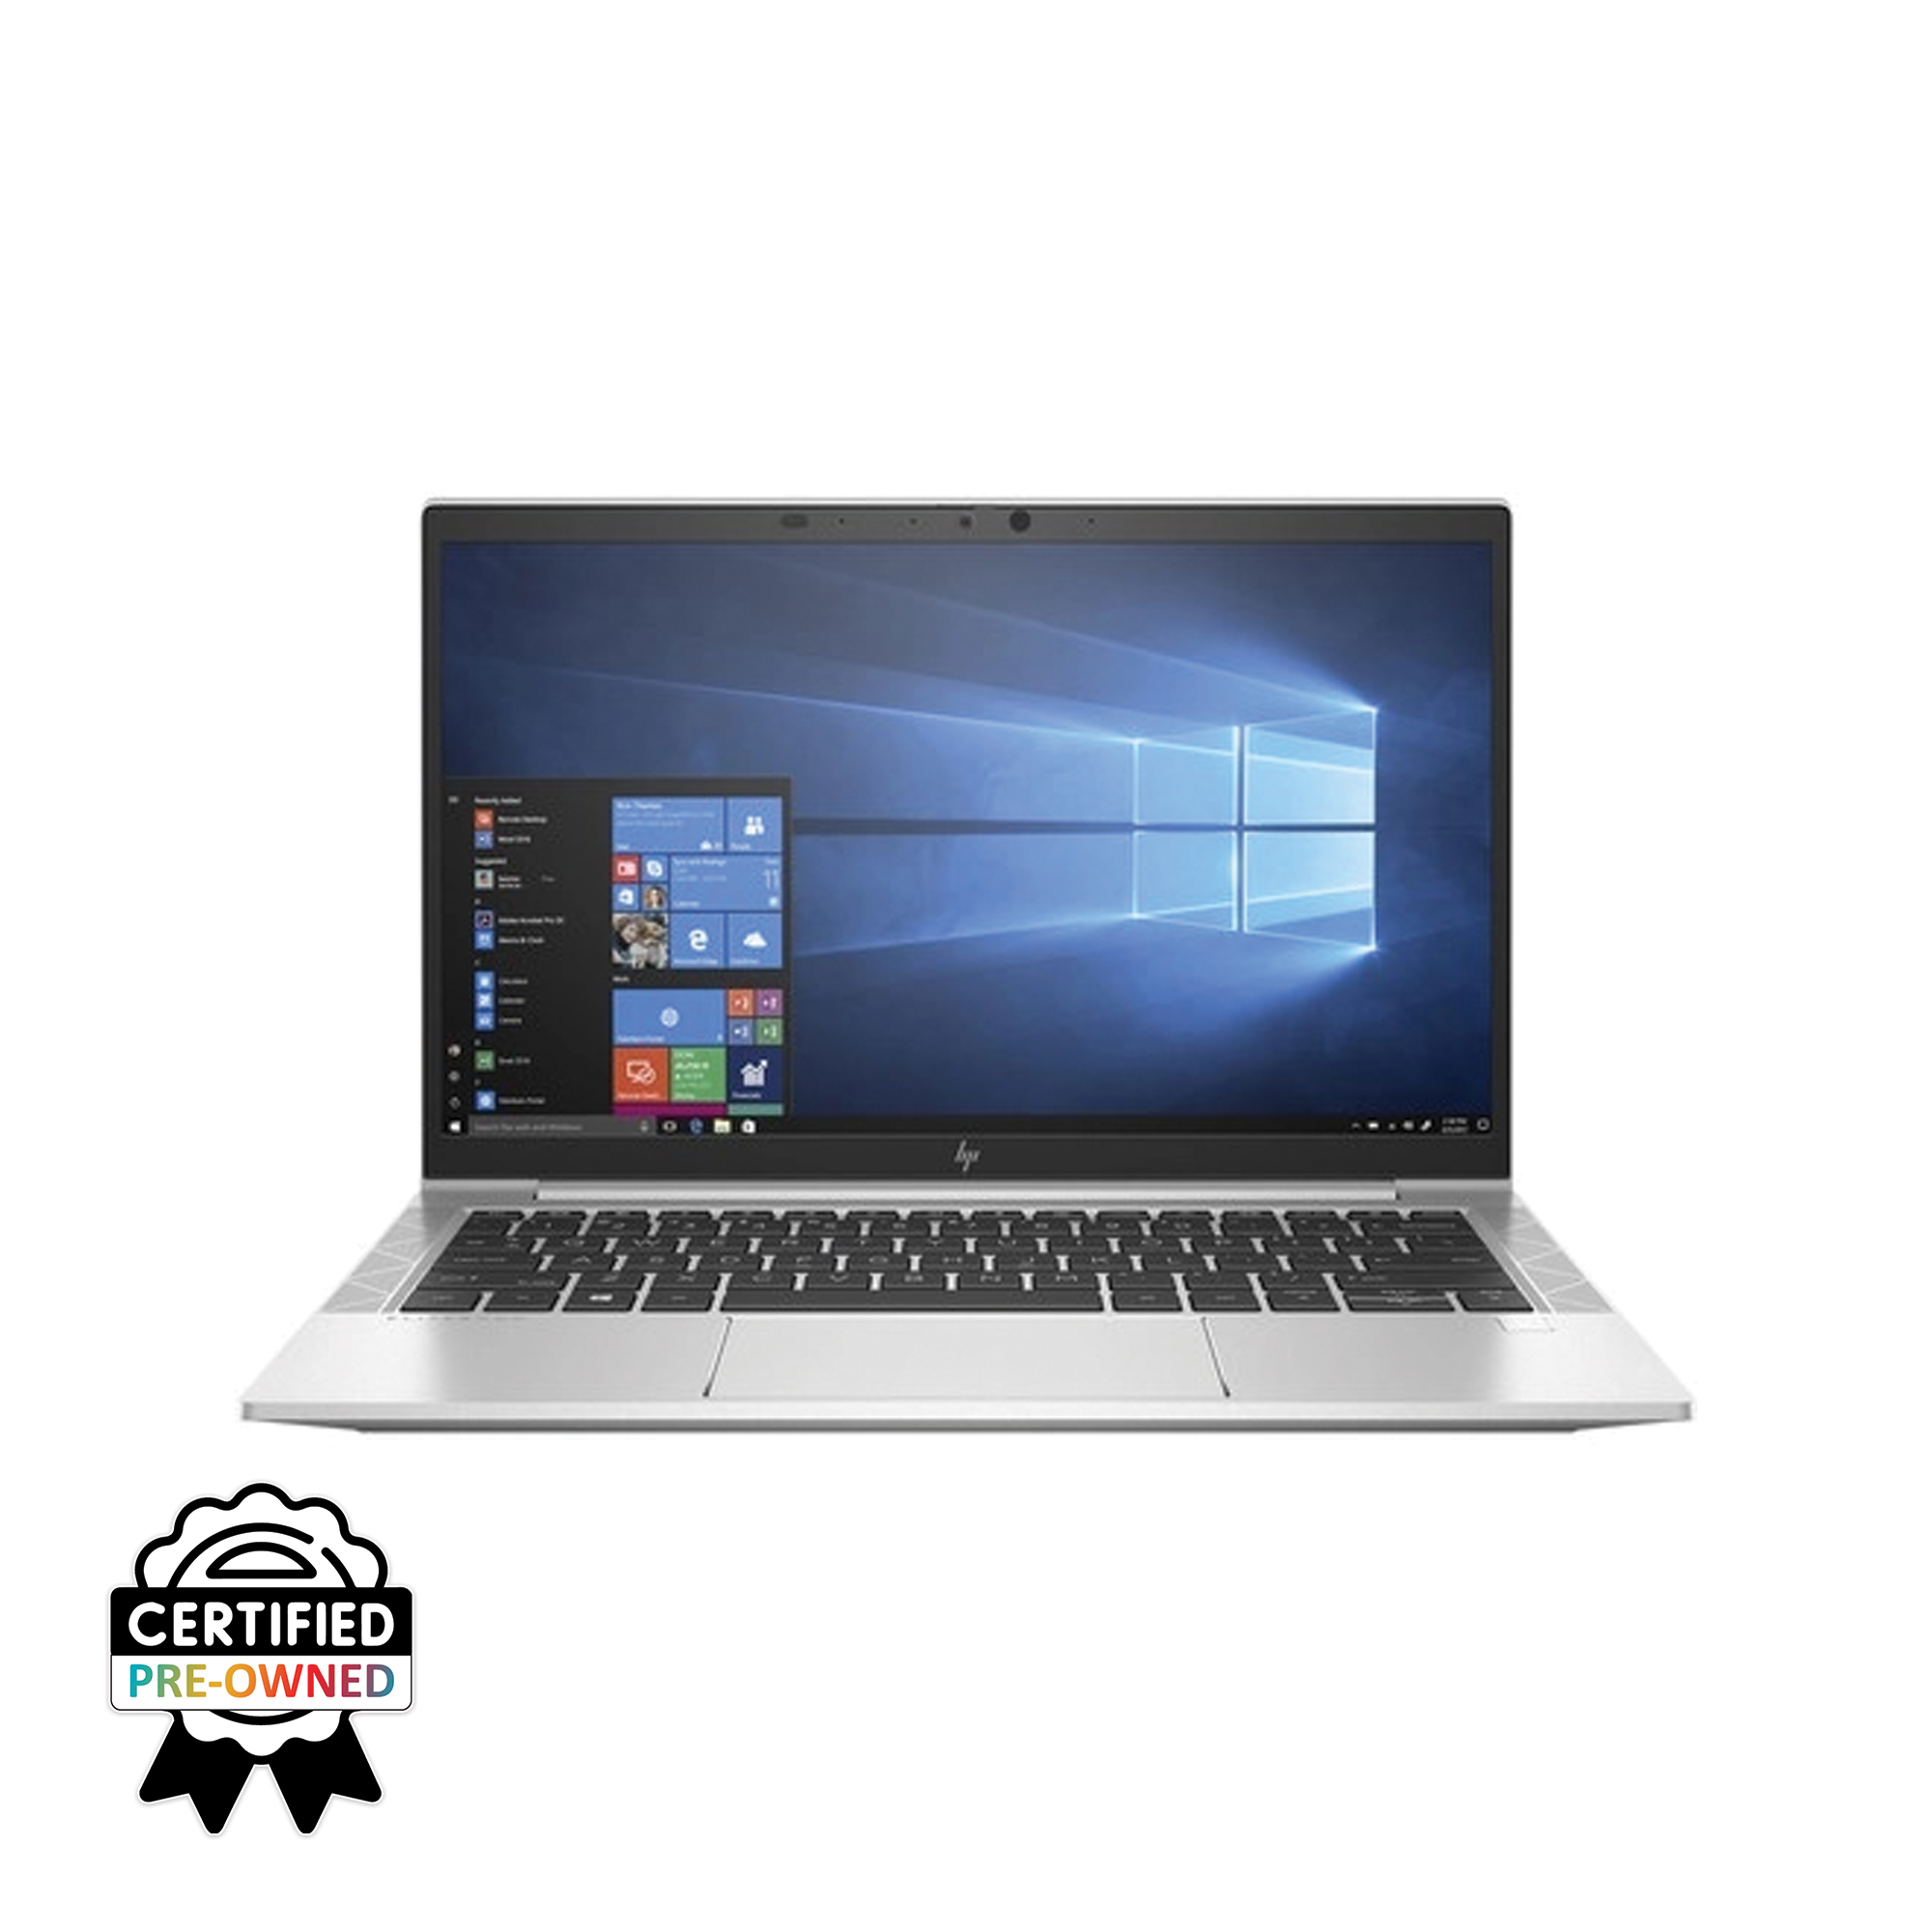 HP EliteBook 840 G7 Core i7 10th Gen 16GB Ram 256GB SSD Touch Display